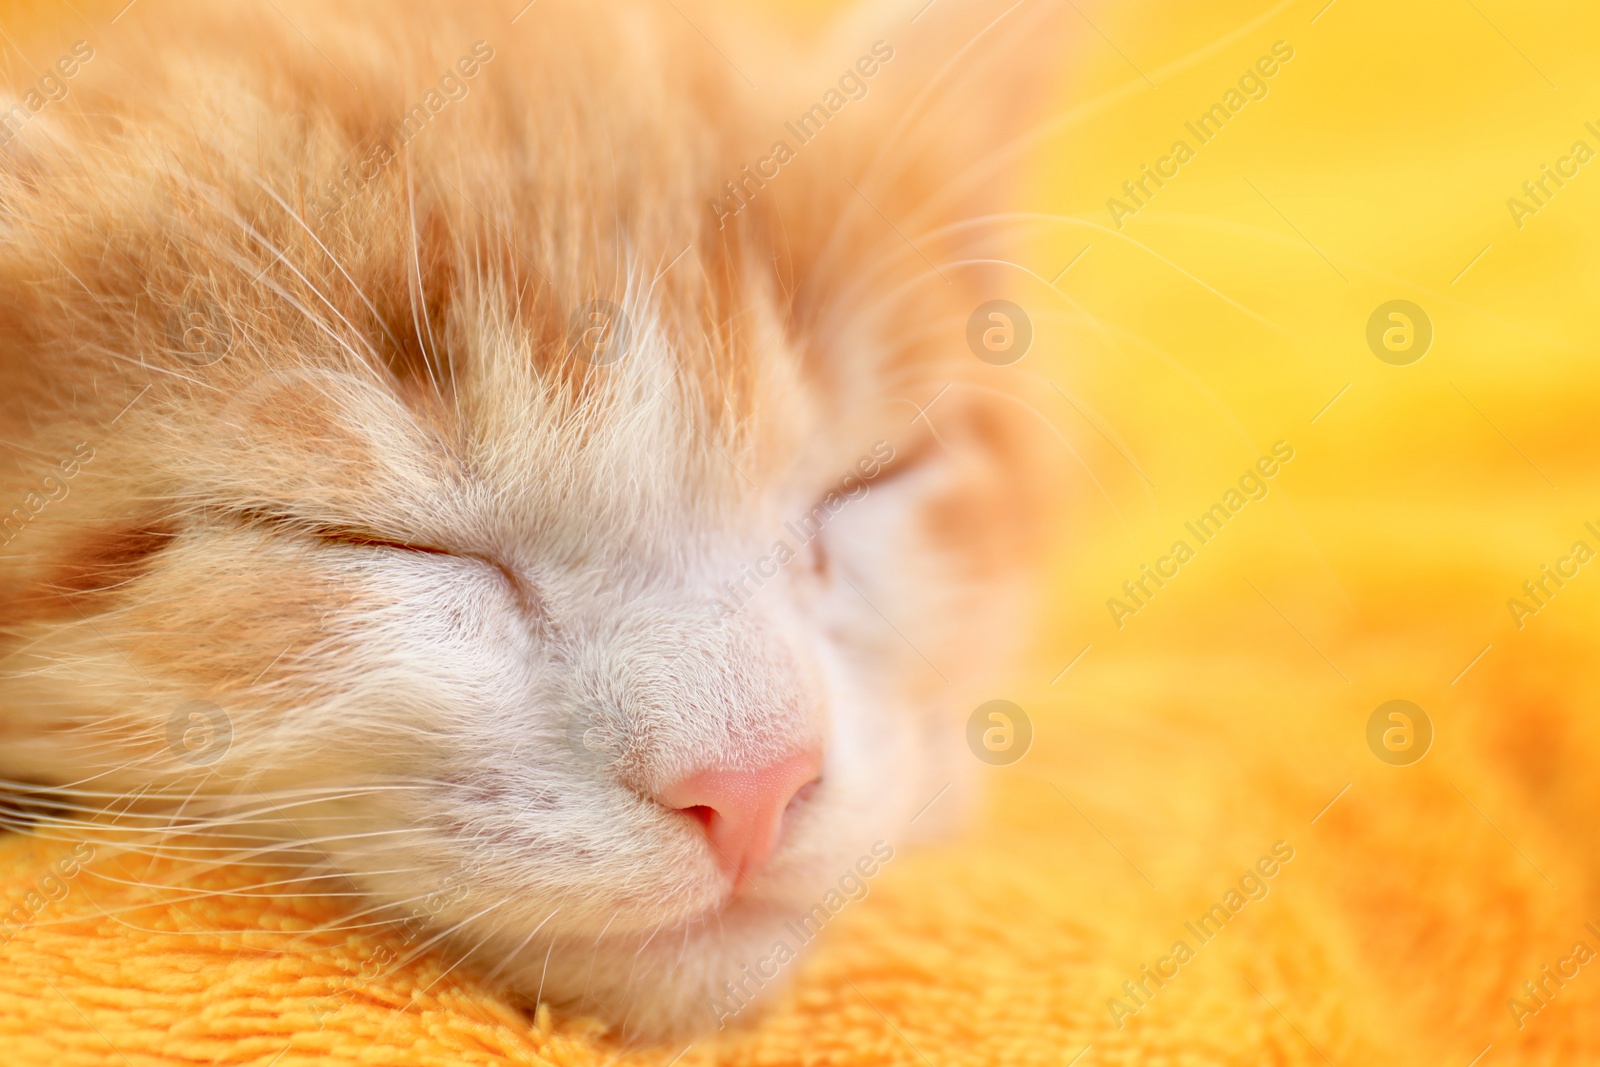 Photo of Cute little kitten sleeping on yellow blanket, closeup view